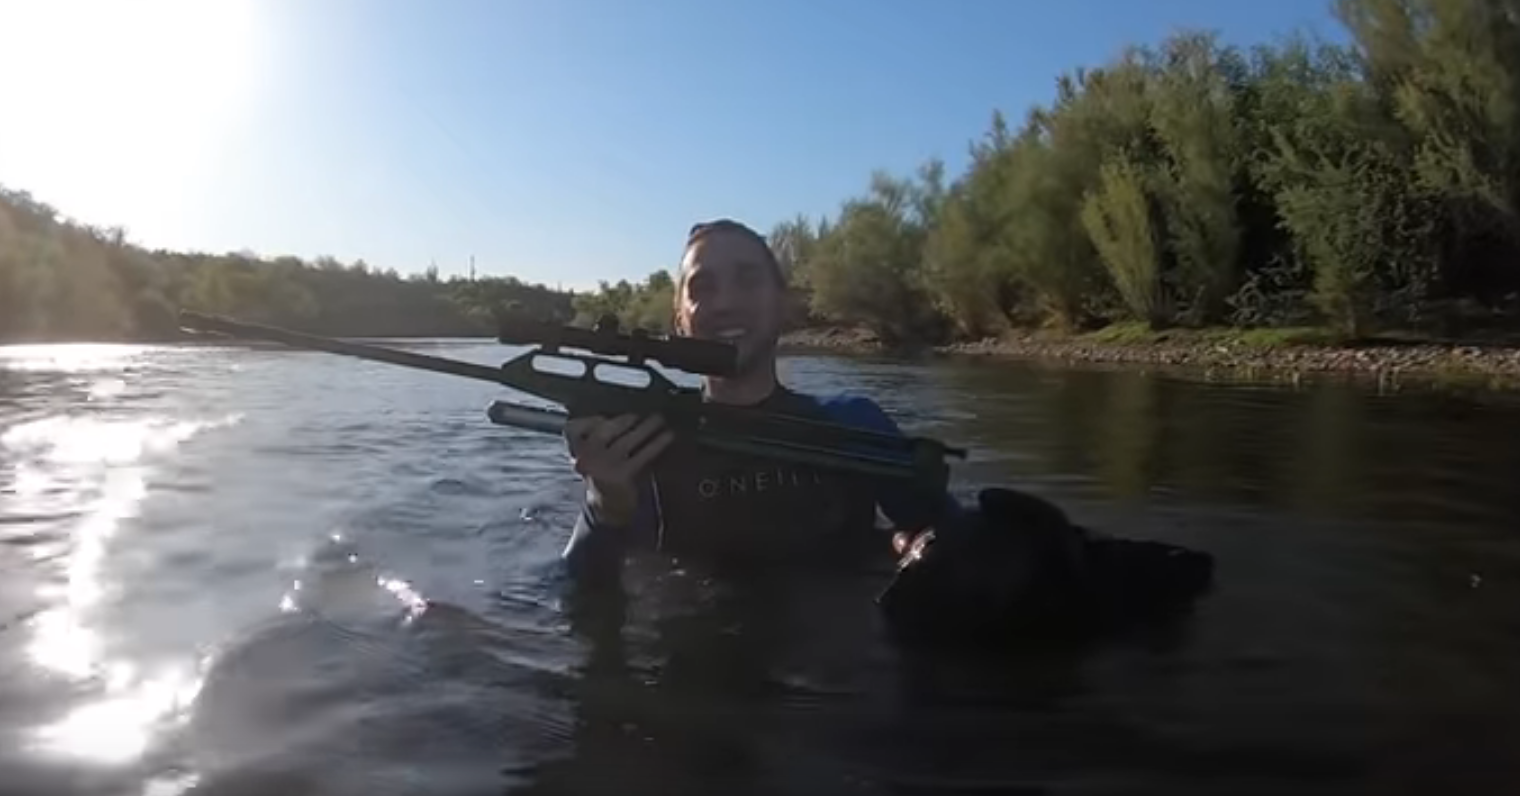 The Riverholics find a gun in 25 feet deep whirl pool